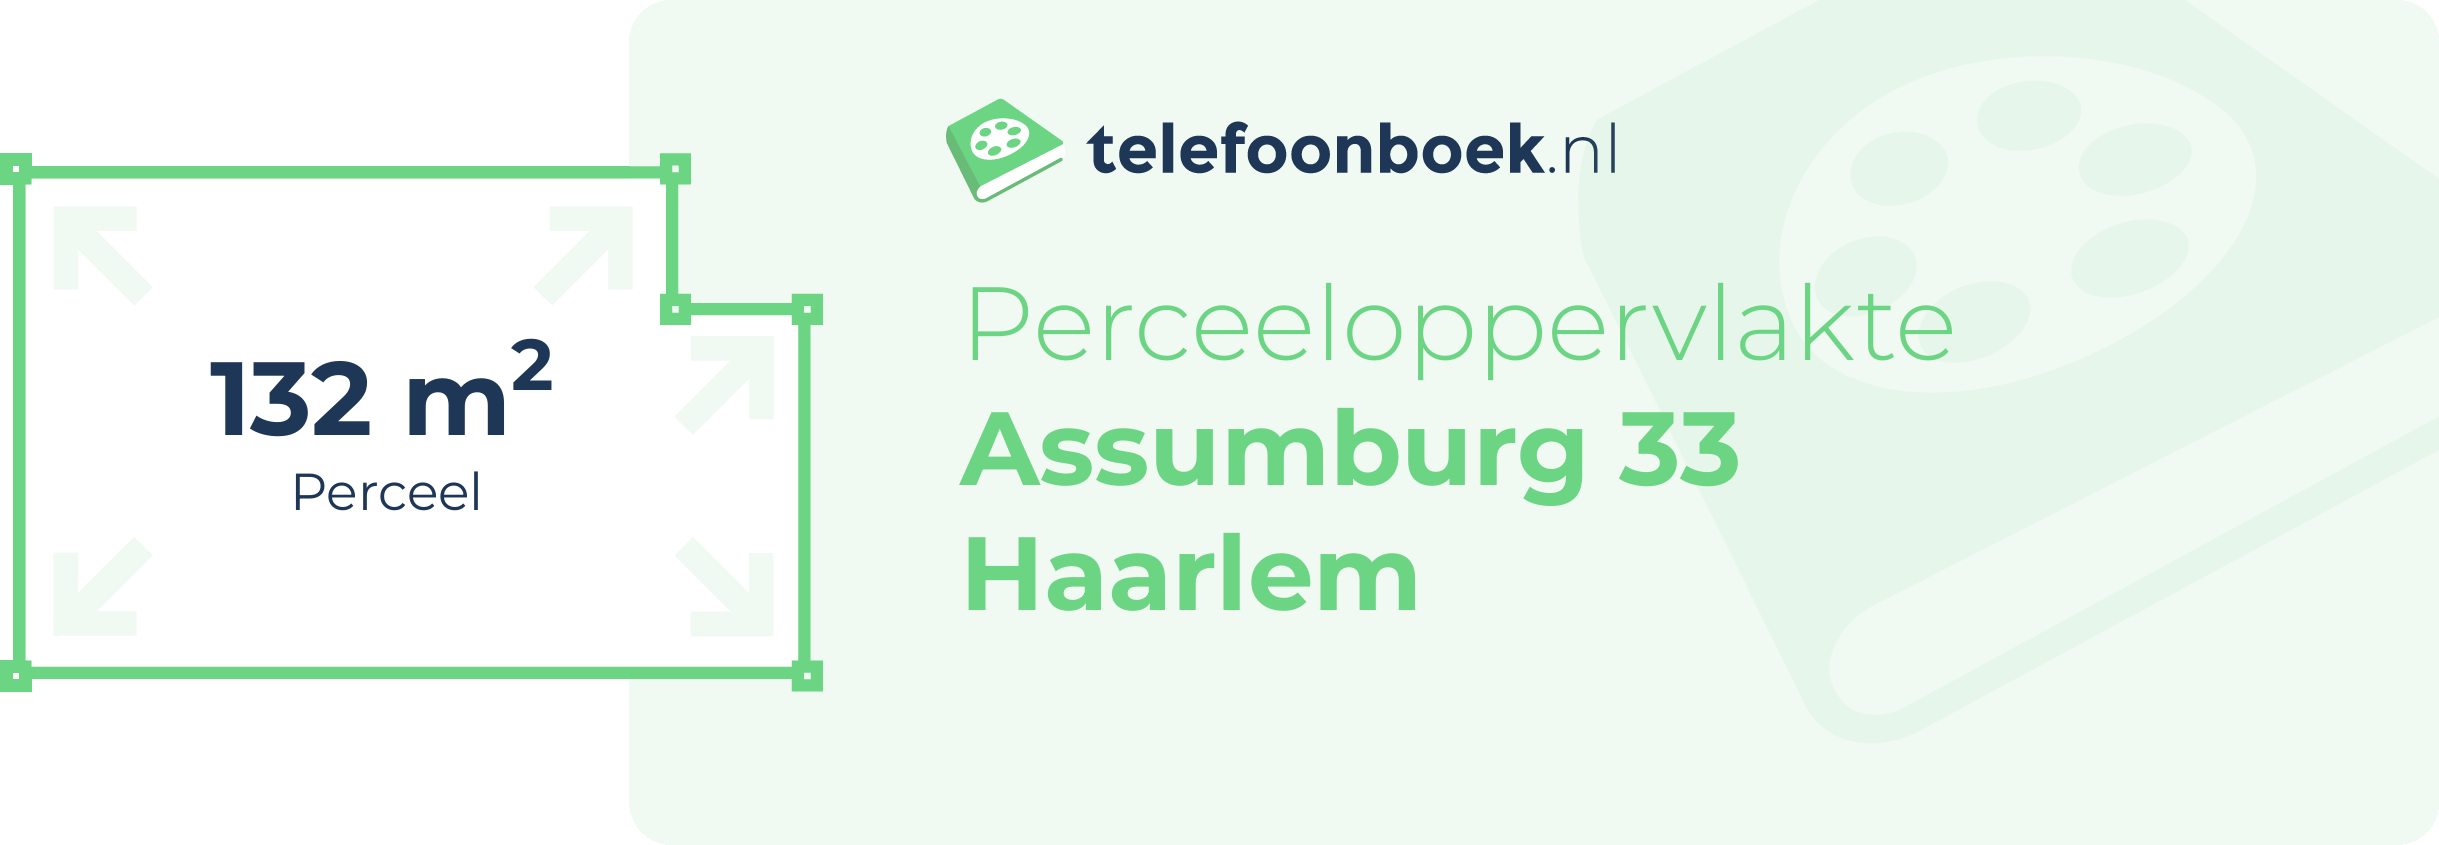 Perceeloppervlakte Assumburg 33 Haarlem